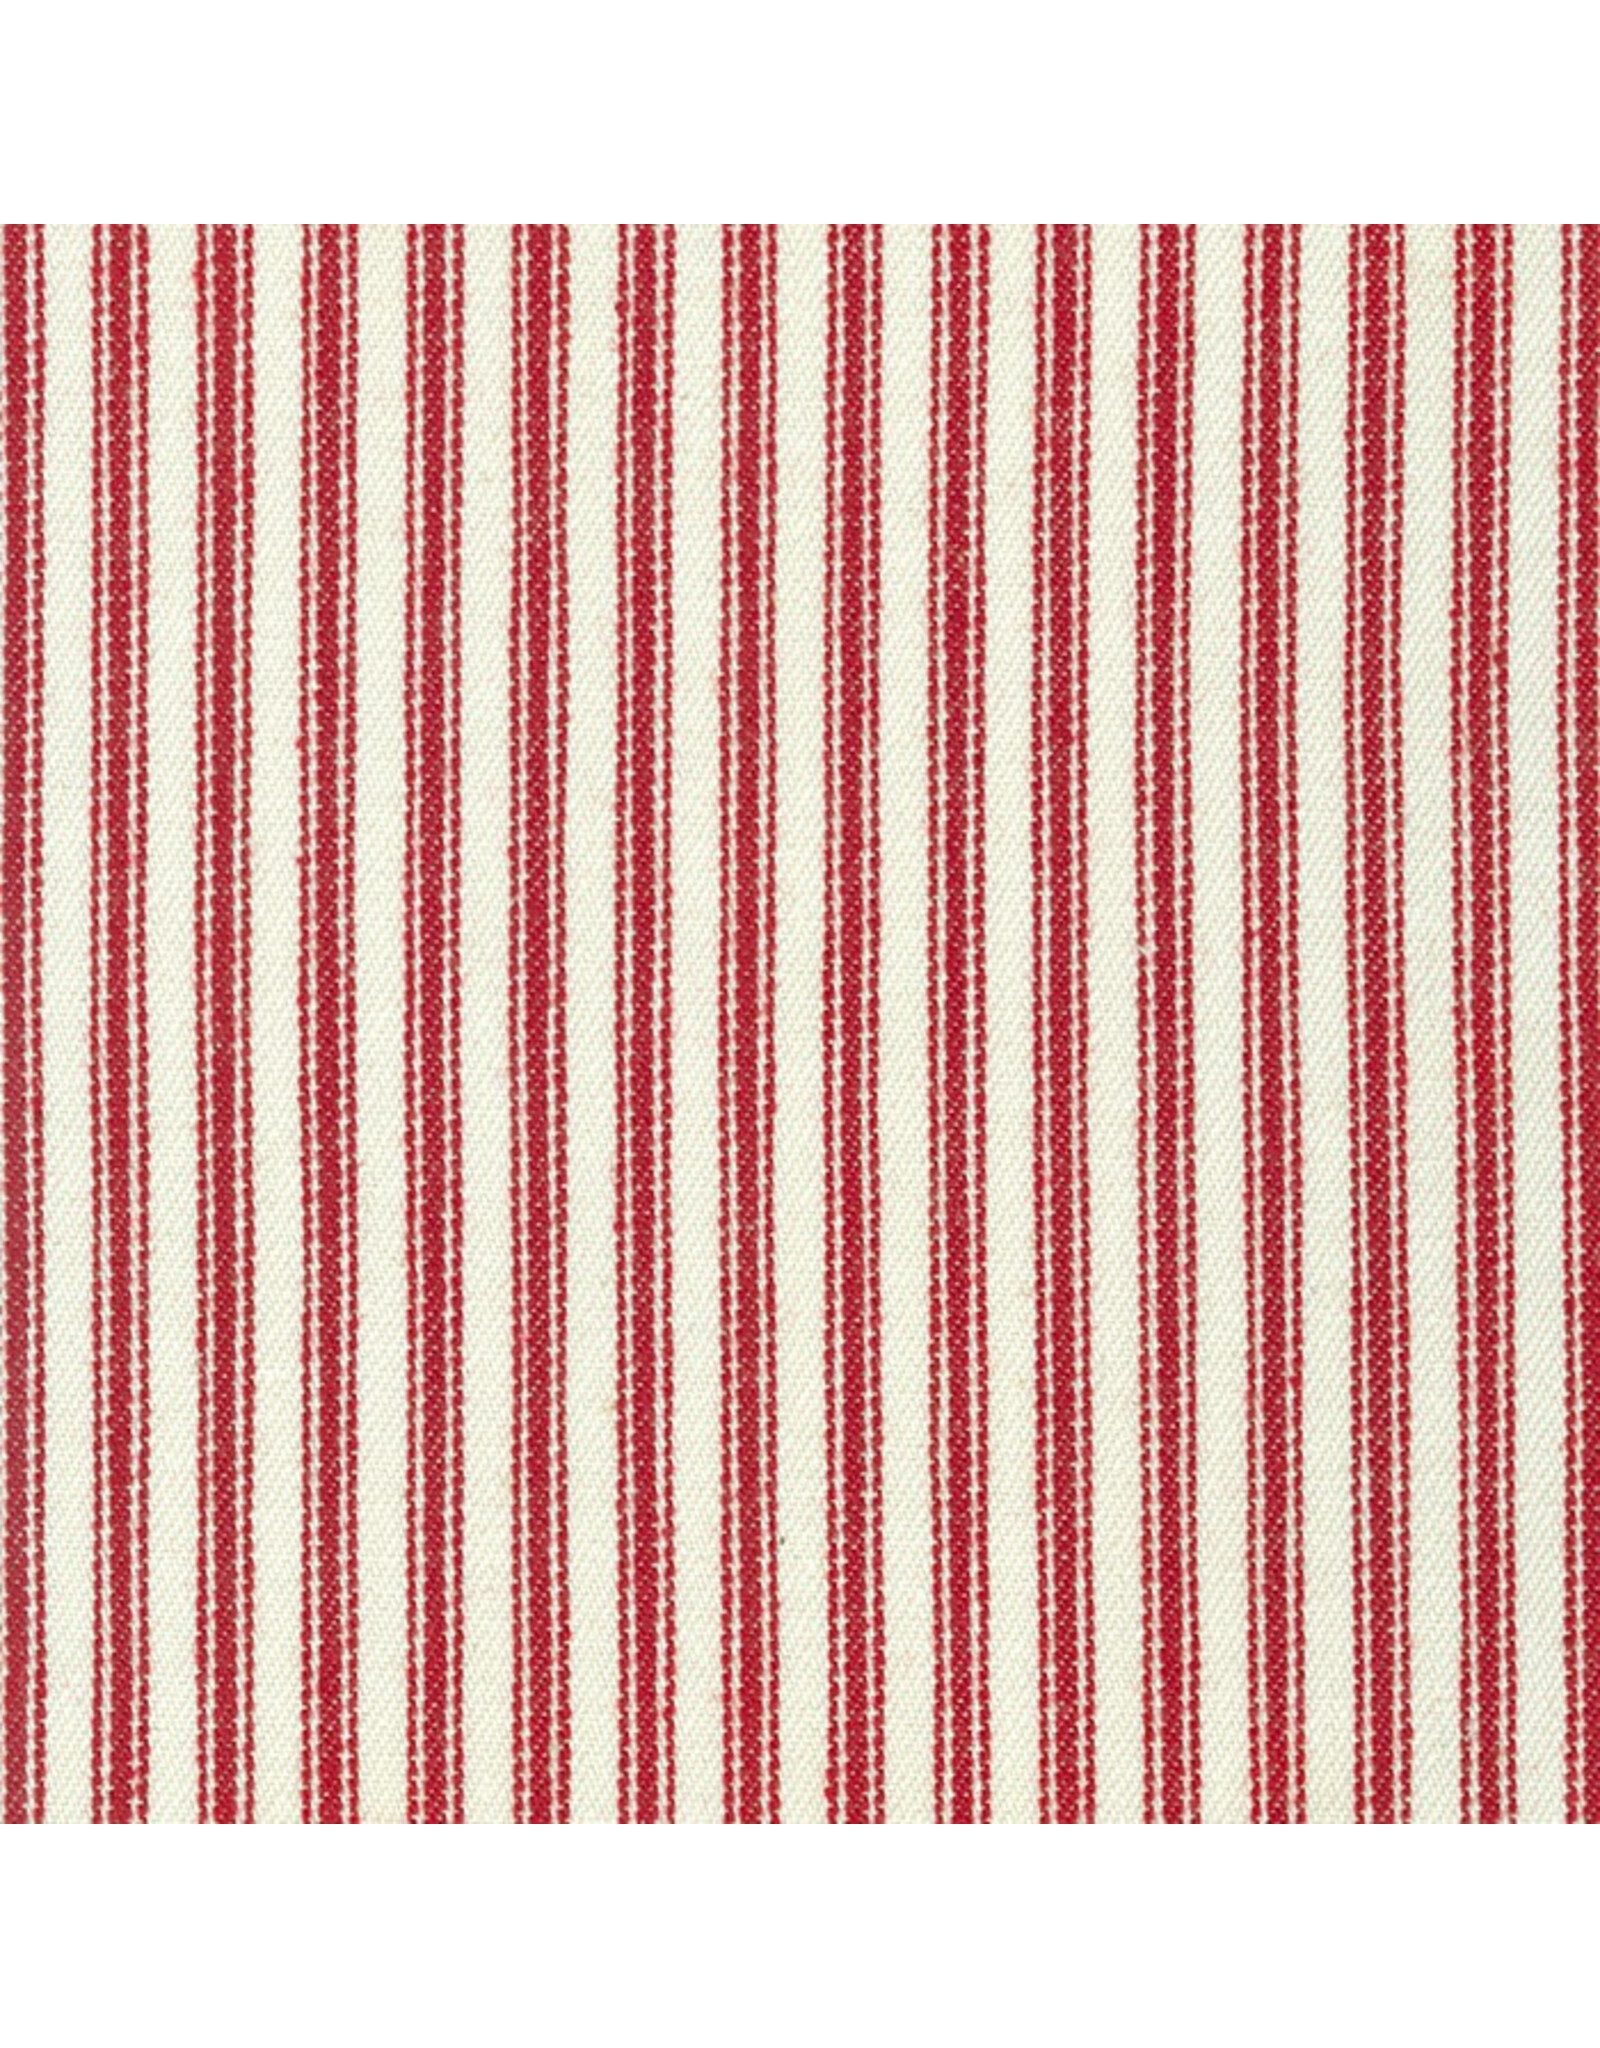 Robert Kaufman Classic Ticking Stripe Canvas in Cherry Red, Fabric Half-Yards